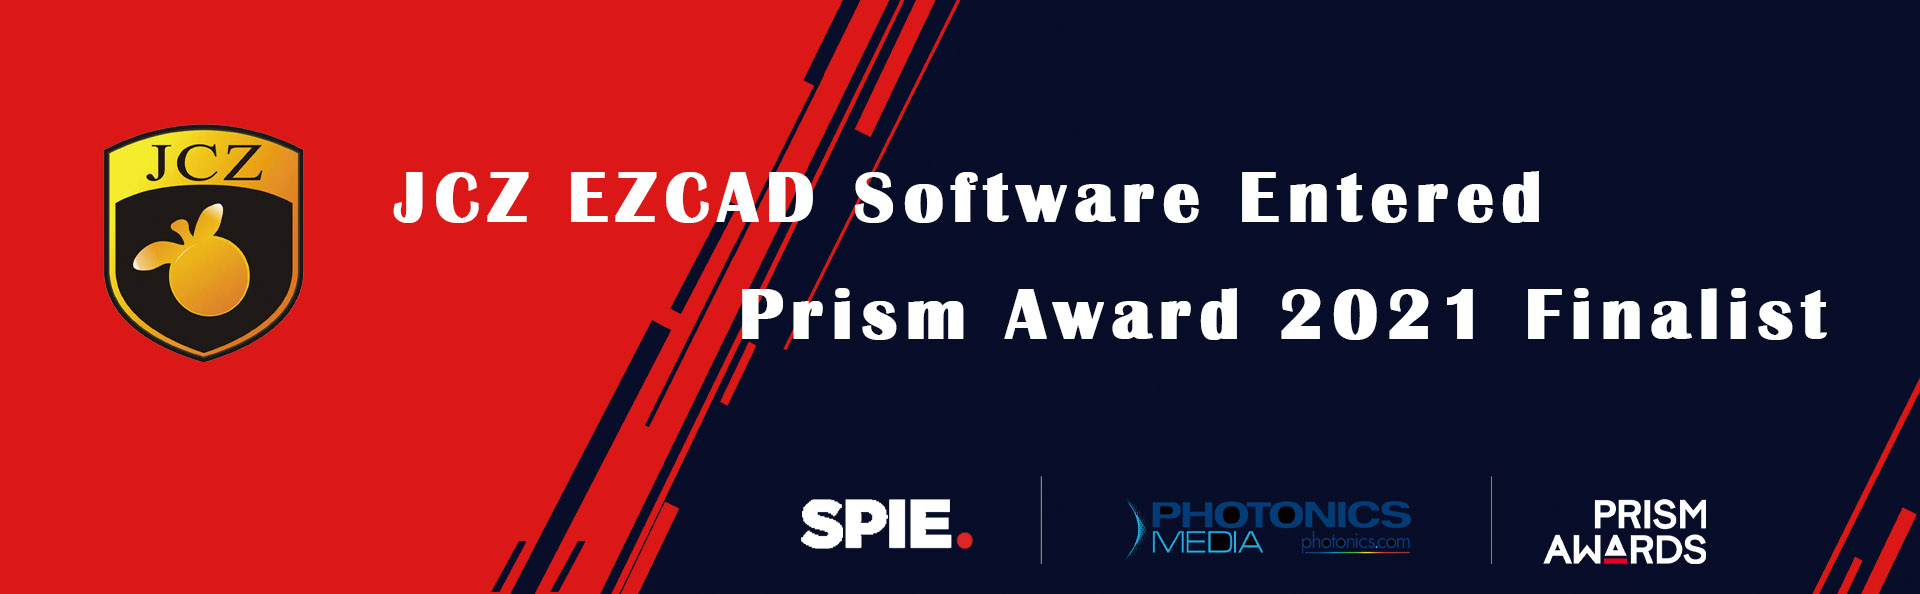 Prism Award 2021 Finalist